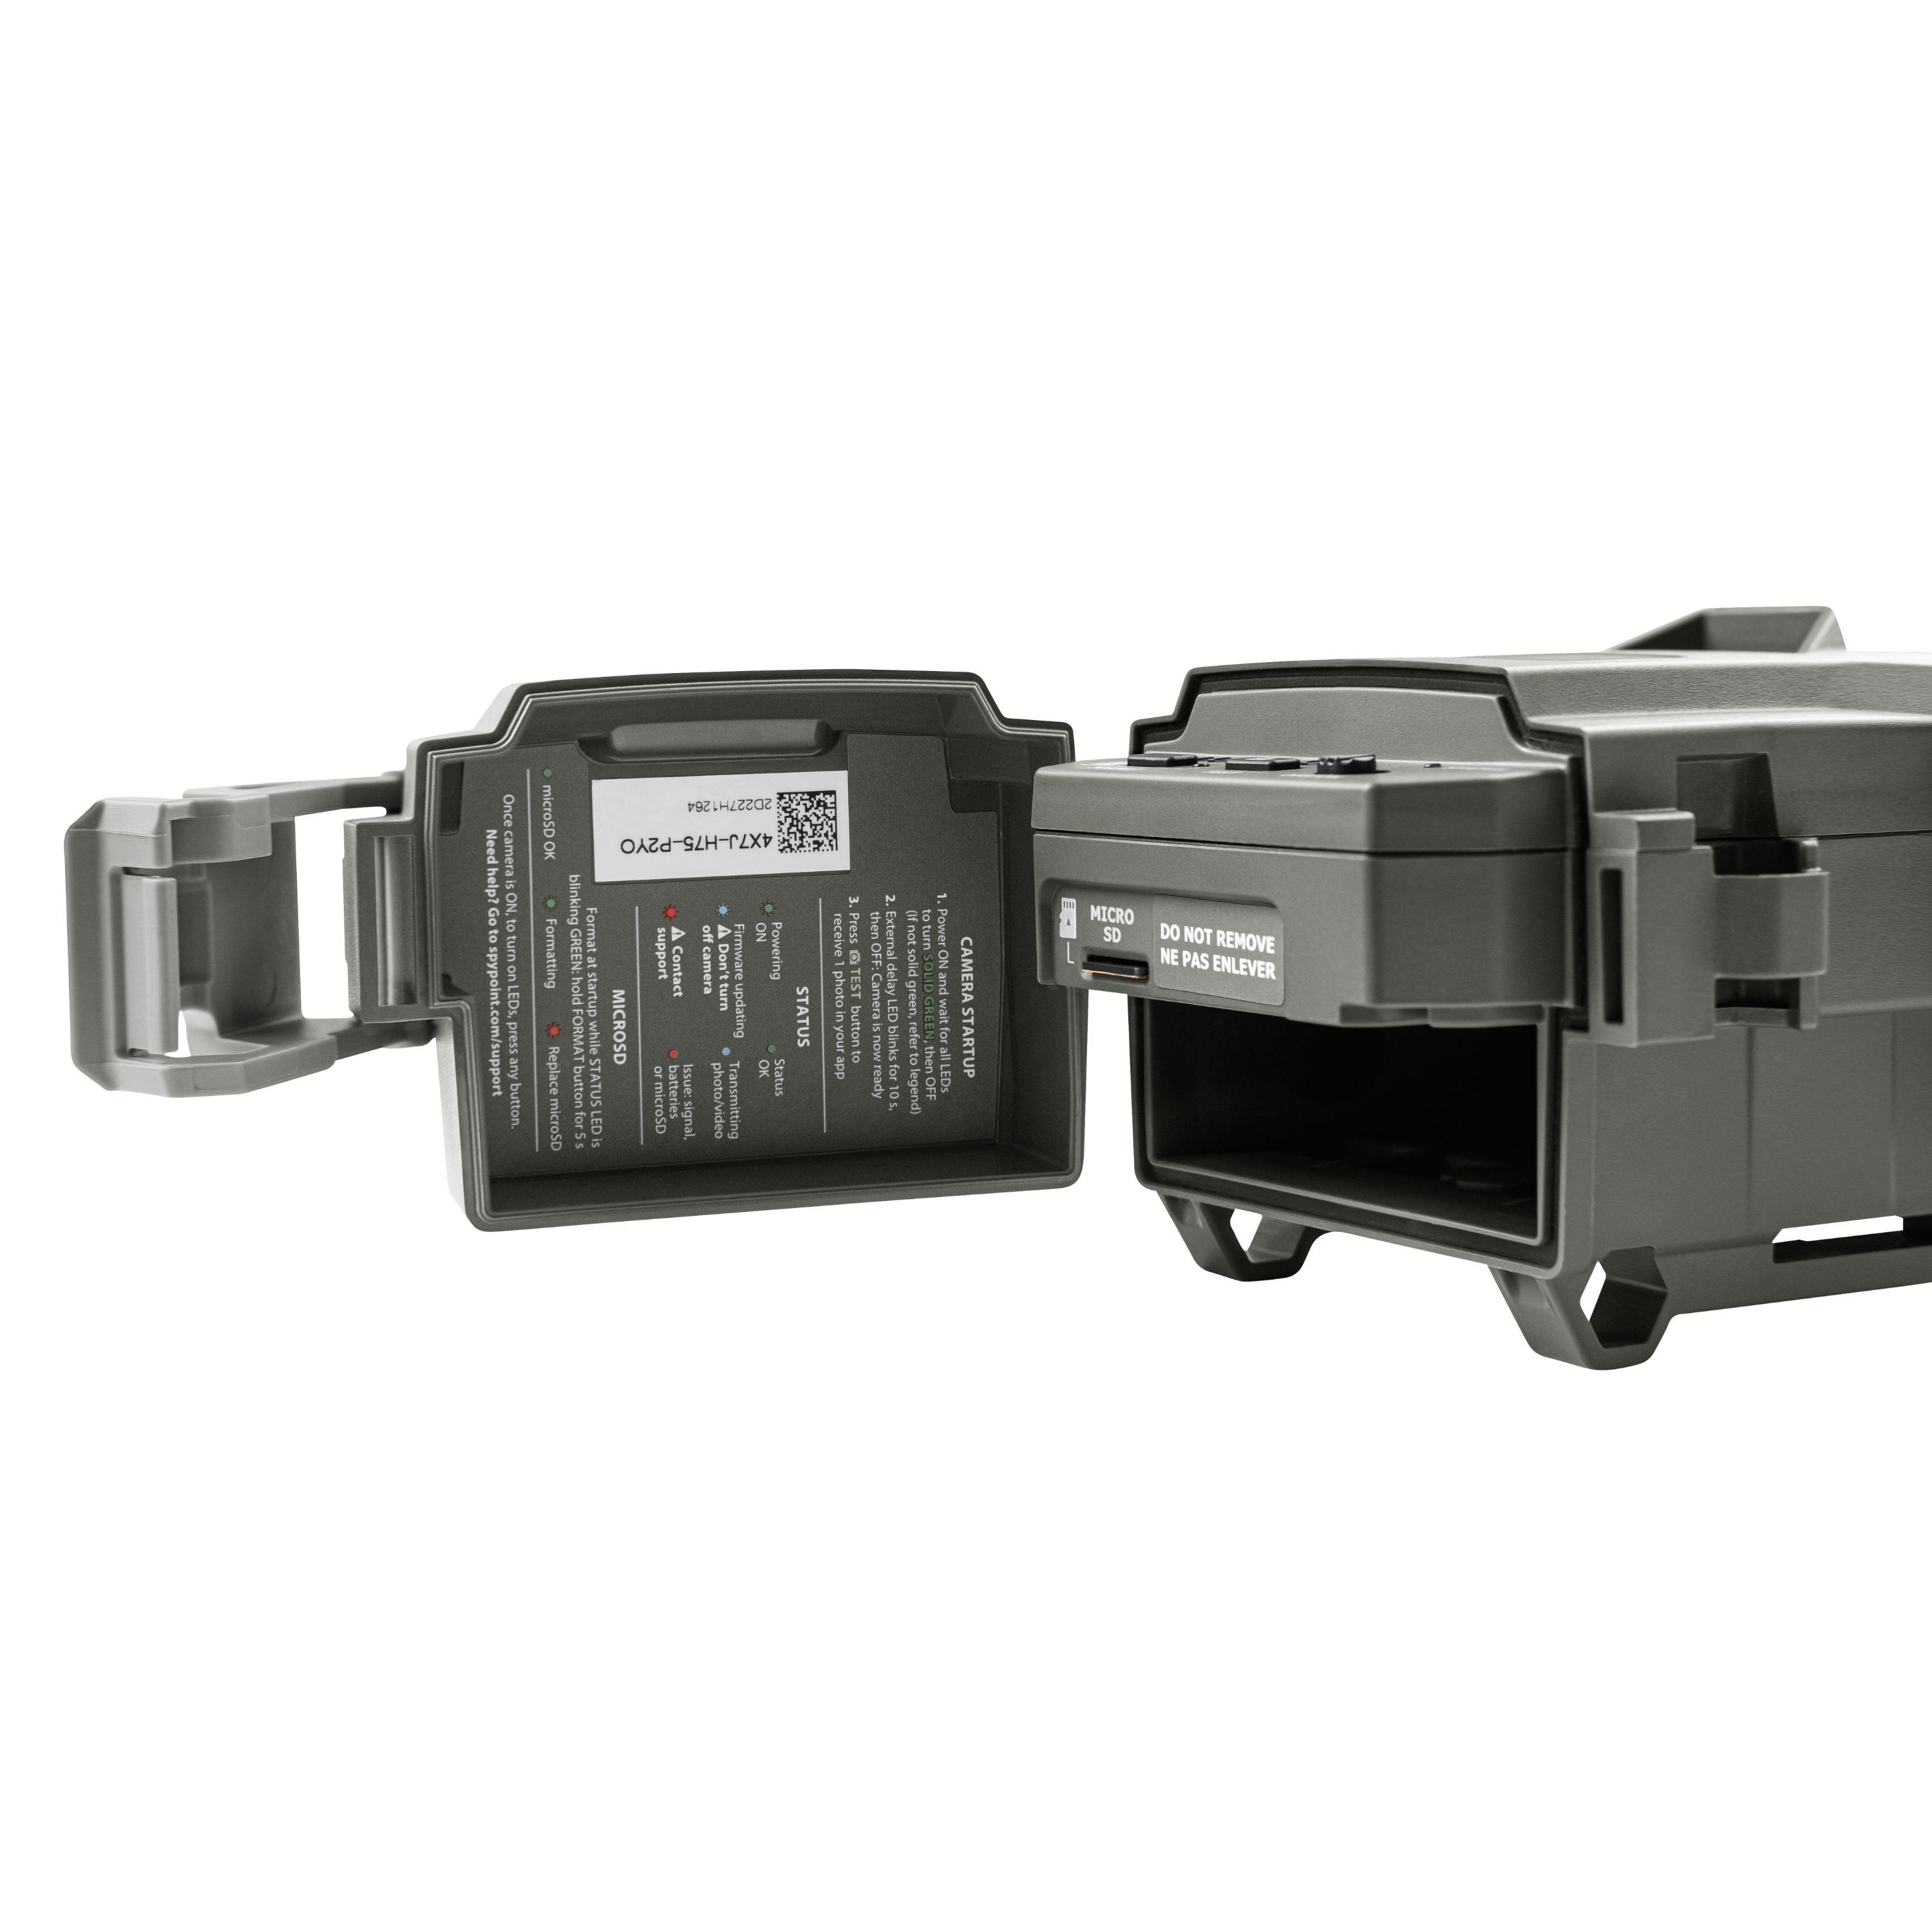 "Flex G-36" Twin pack cellular camera